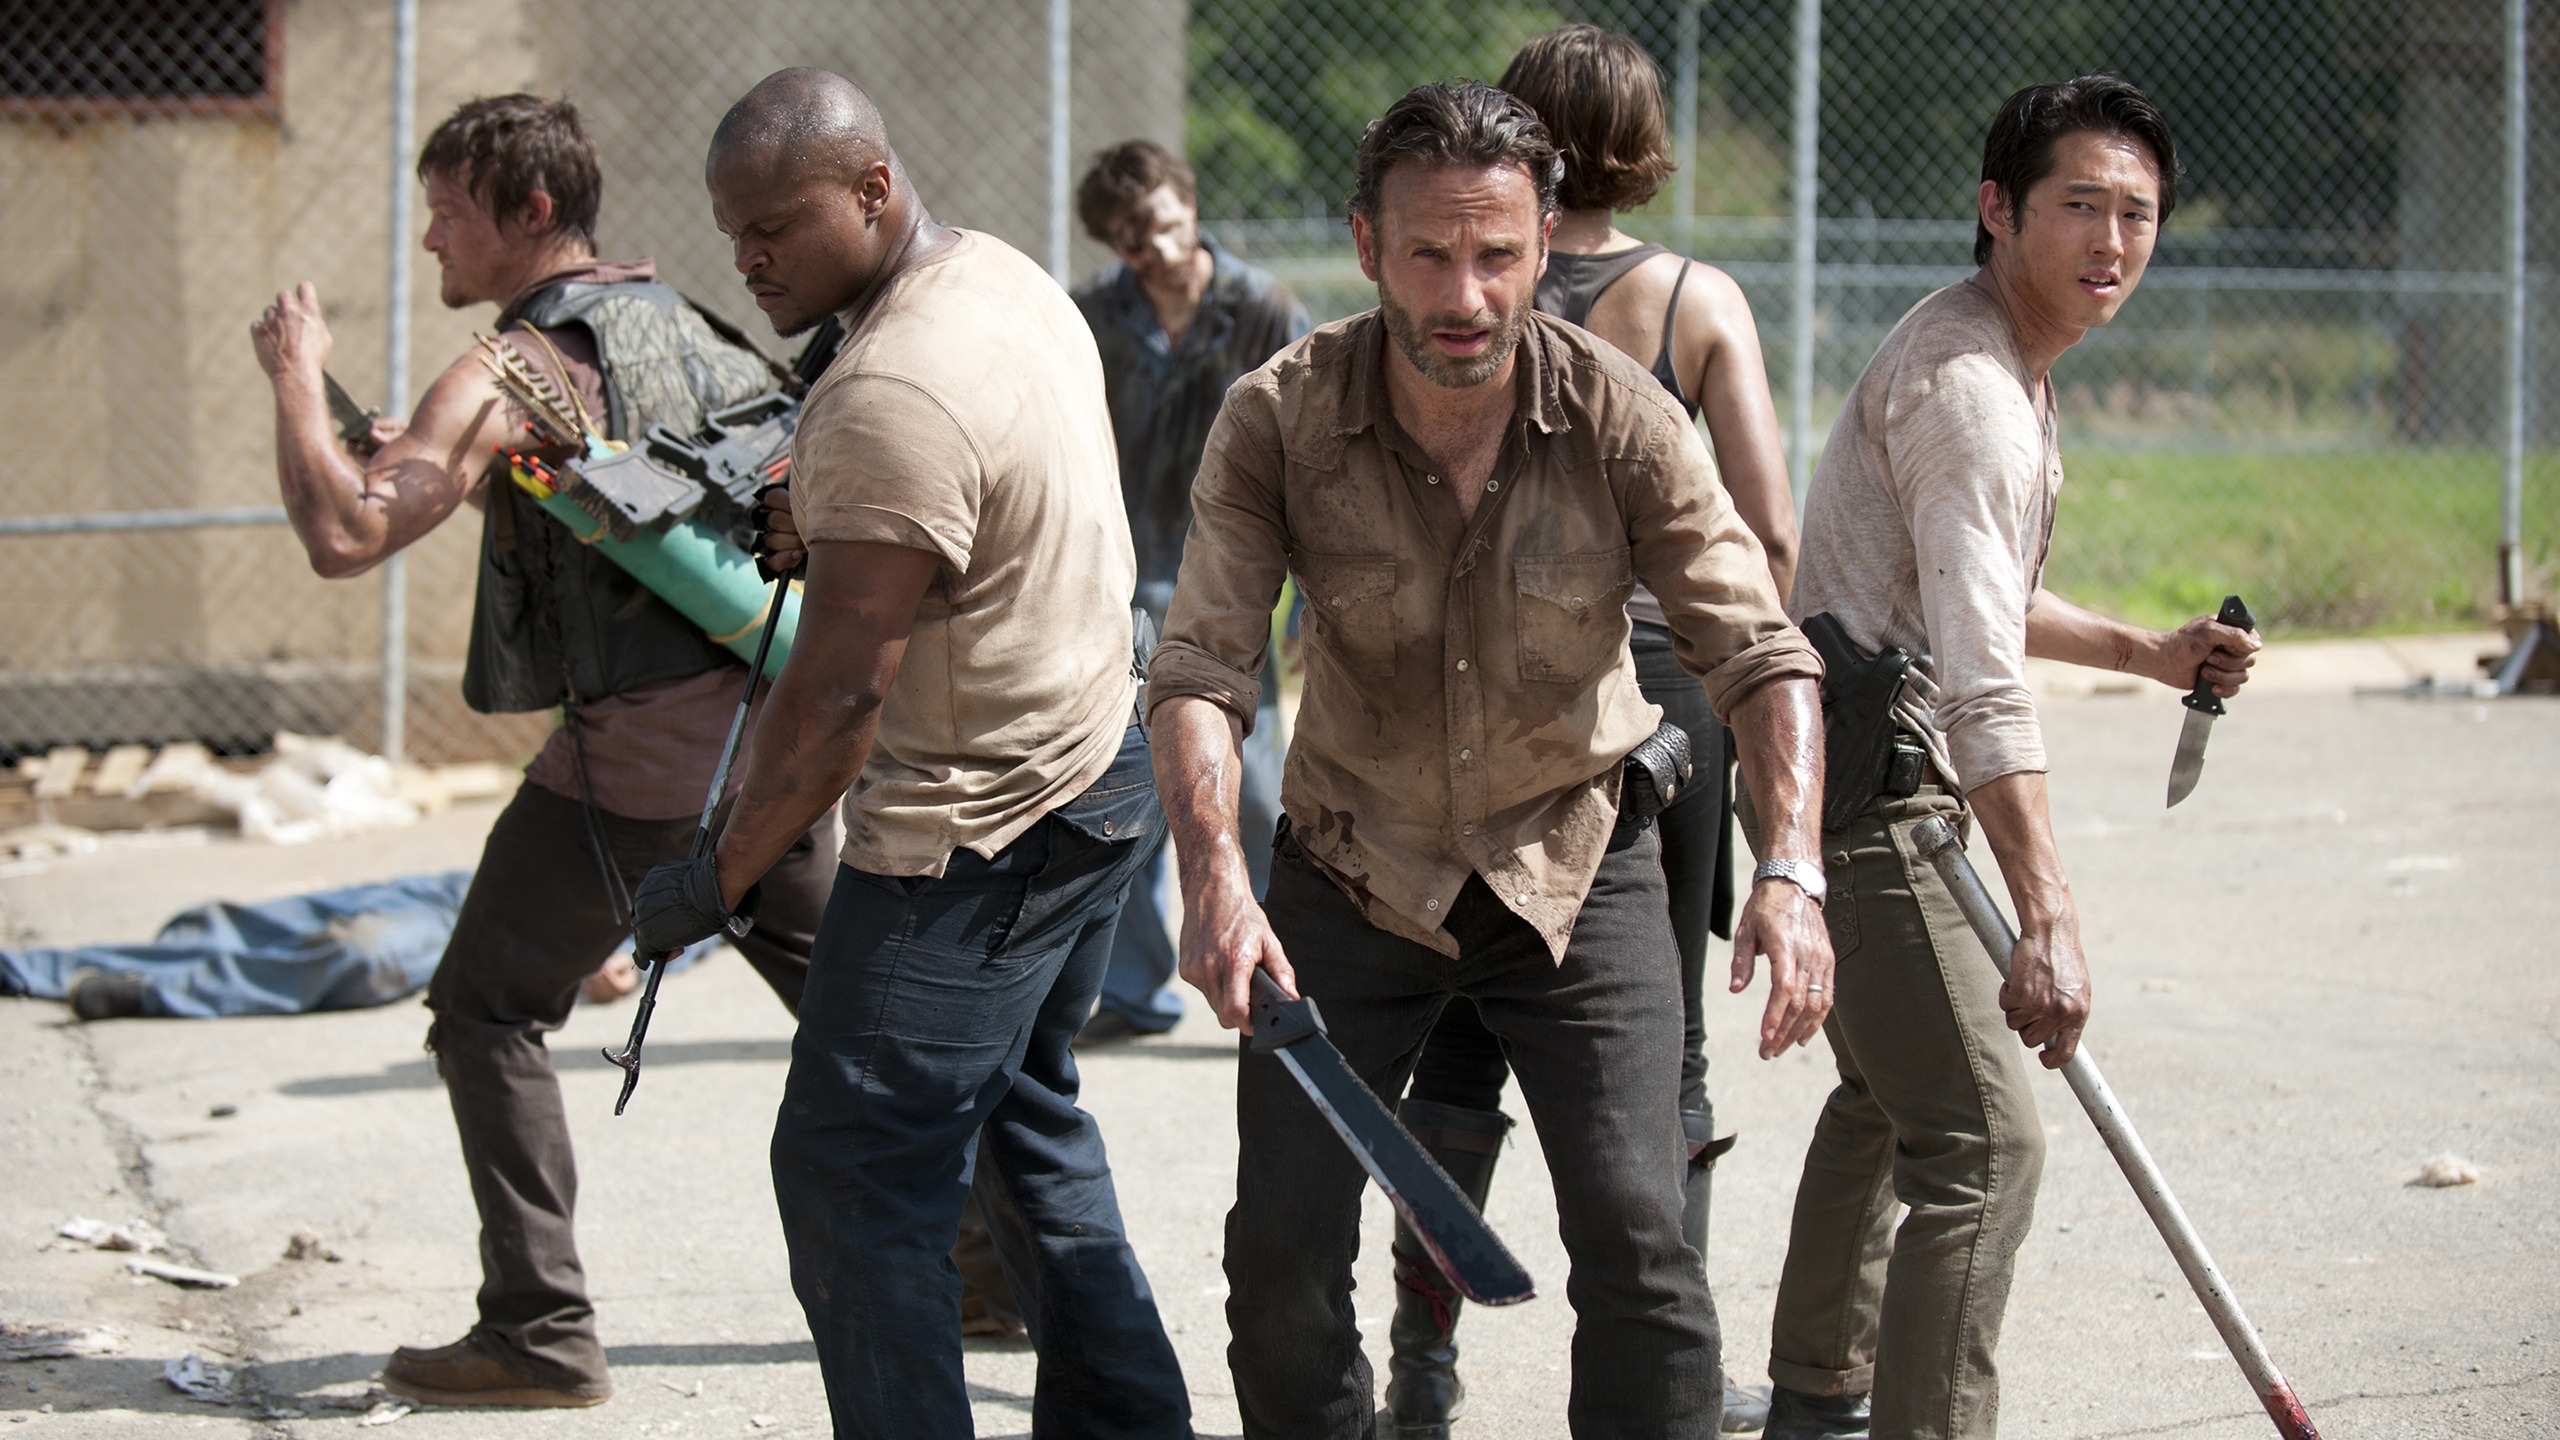 The Walking Dead Season 3 for 2560x1440 HDTV resolution